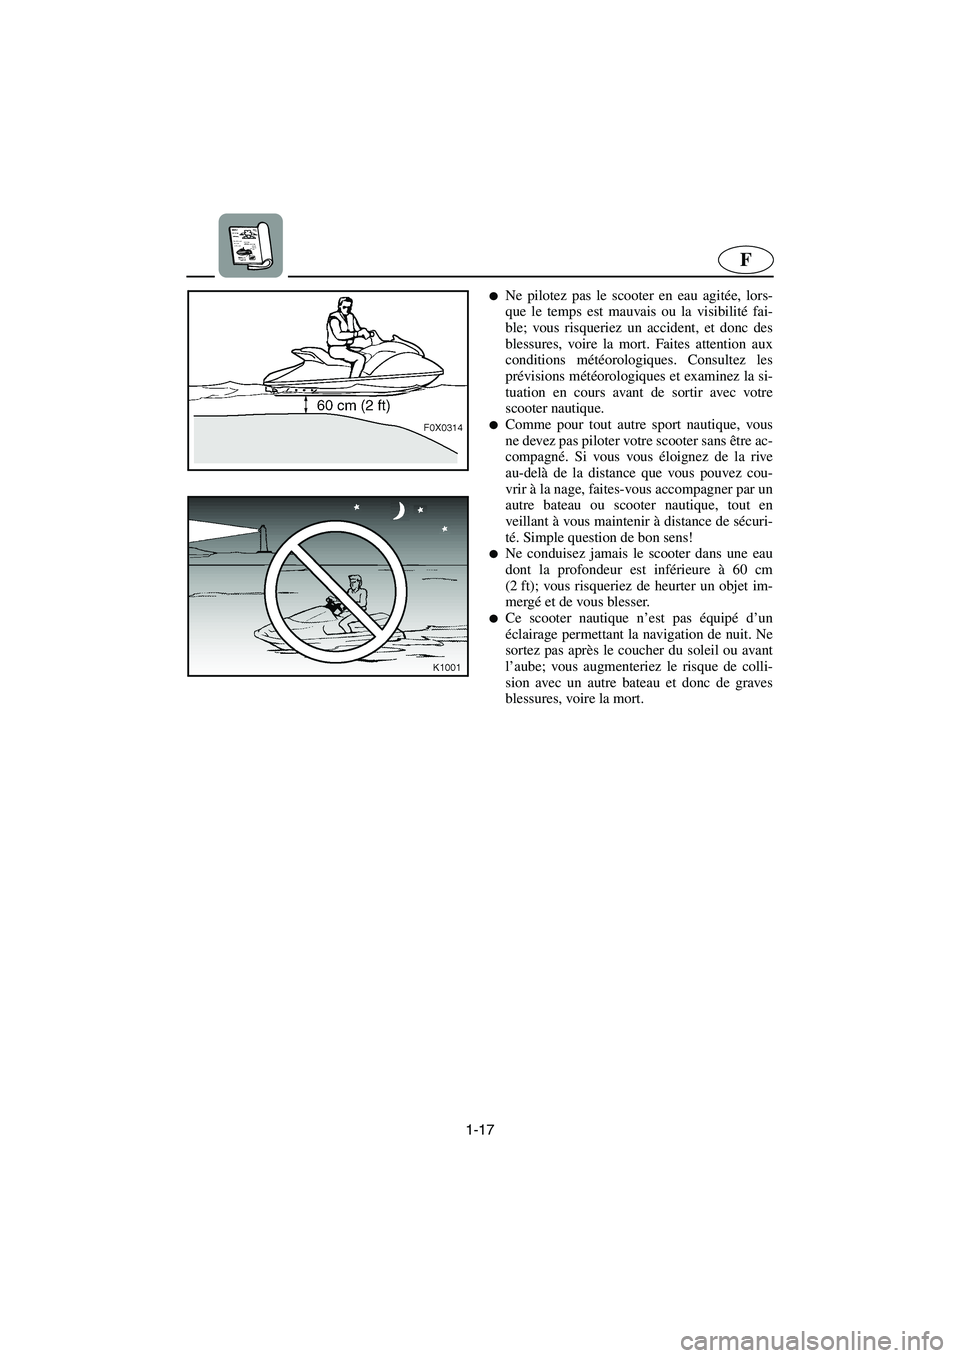 YAMAHA GP1300R 2003  Manuale de Empleo (in Spanish) 1-17
F
Ne pilotez pas le scooter en eau agitée, lors-
que le temps est mauvais ou la visibilité fai-
ble; vous risqueriez un accident, et donc des
blessures, voire la mort. Faites attention aux
con